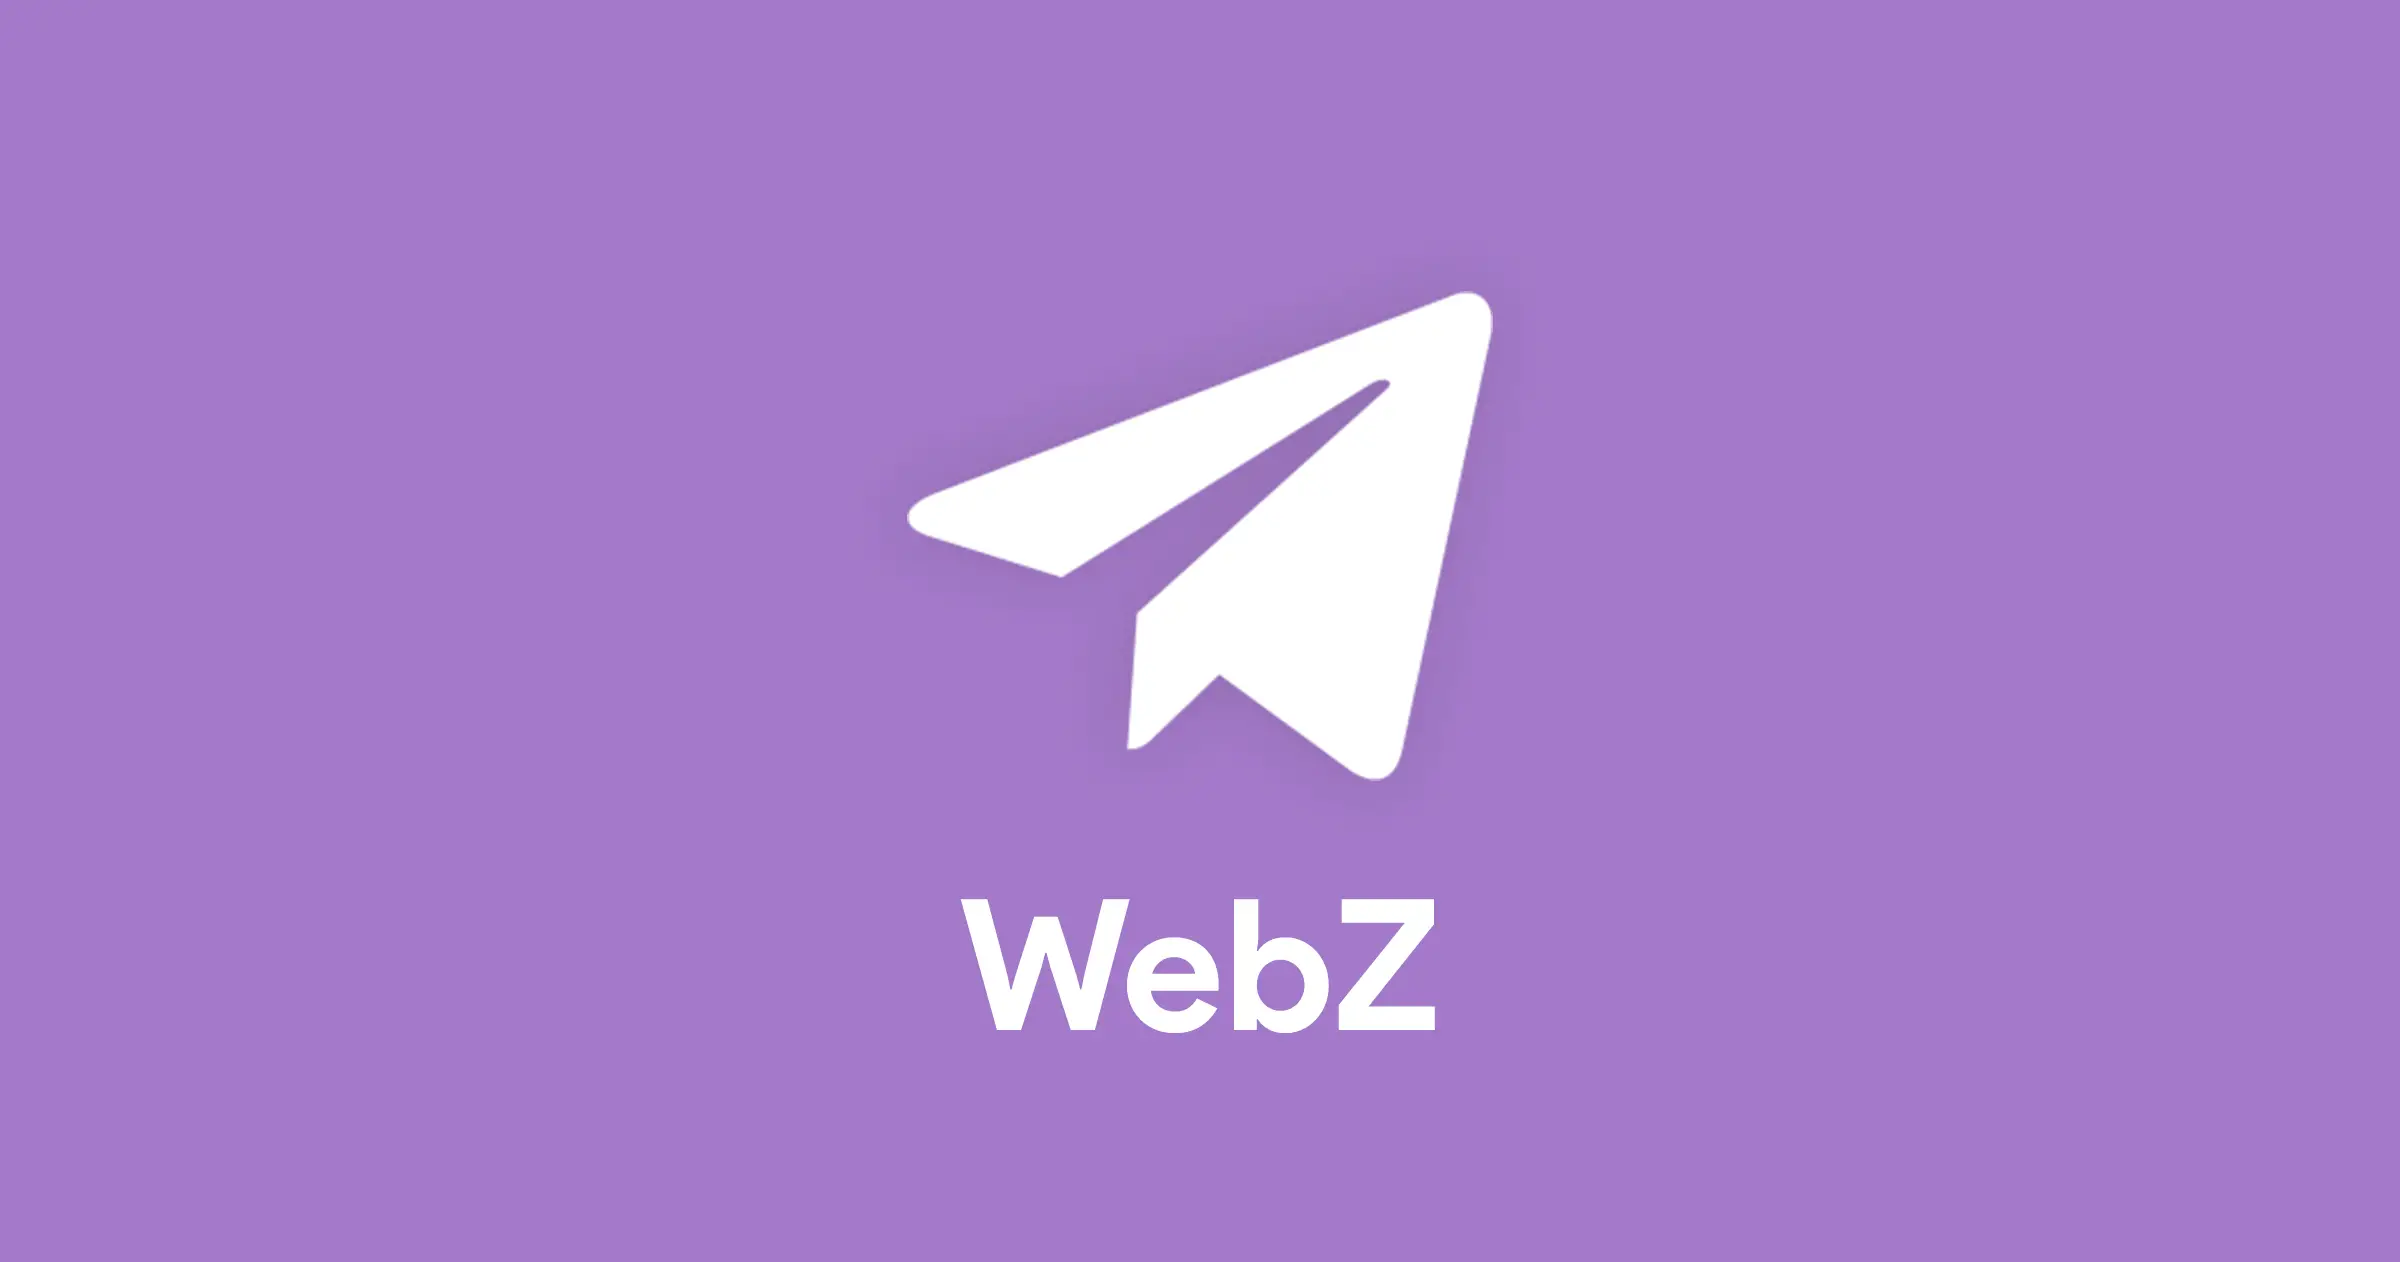 Telegram web application. Телеграм web. Логотип телеграмм. Телеграм веб значок. Маленький значок телеграм.